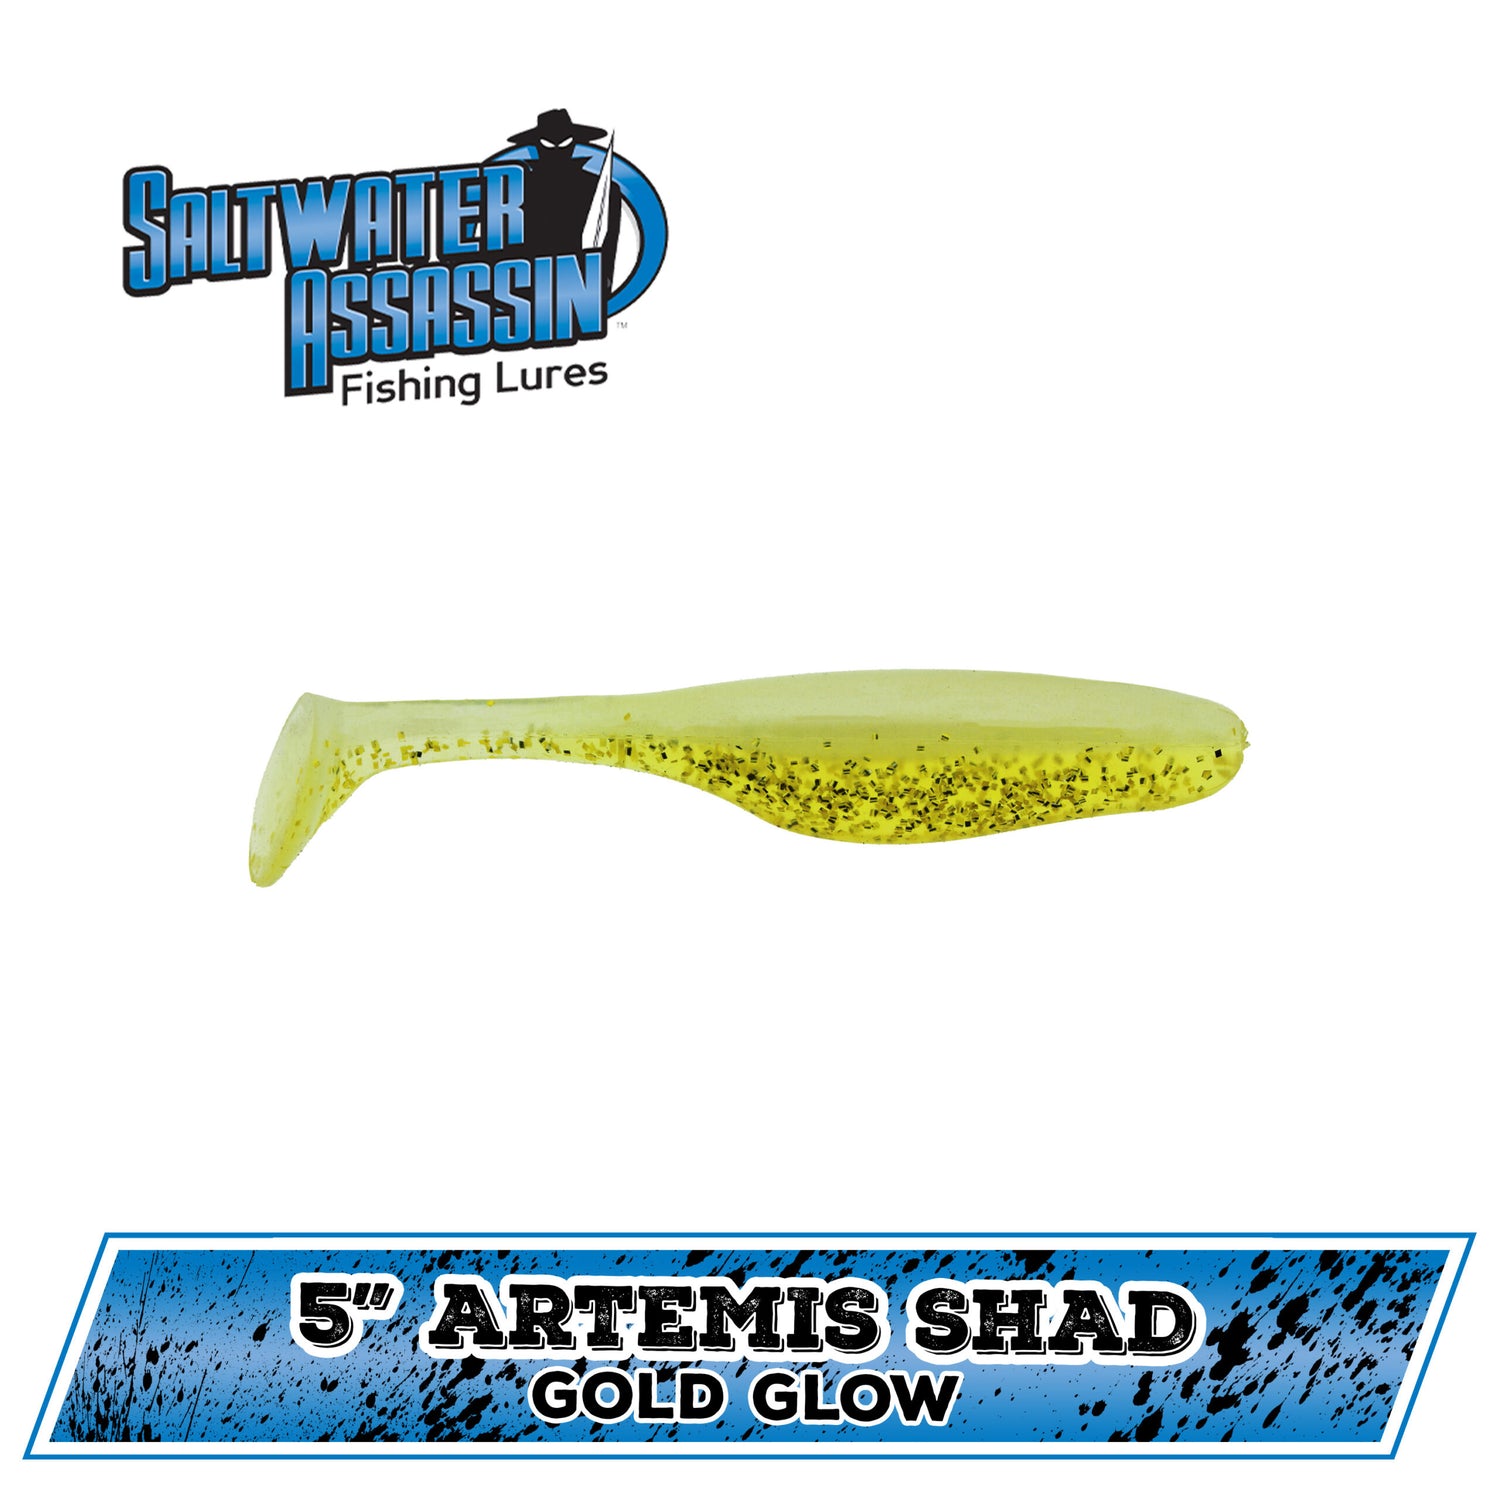 5 Artemis Shad – Bass Assassin Lures, Inc.